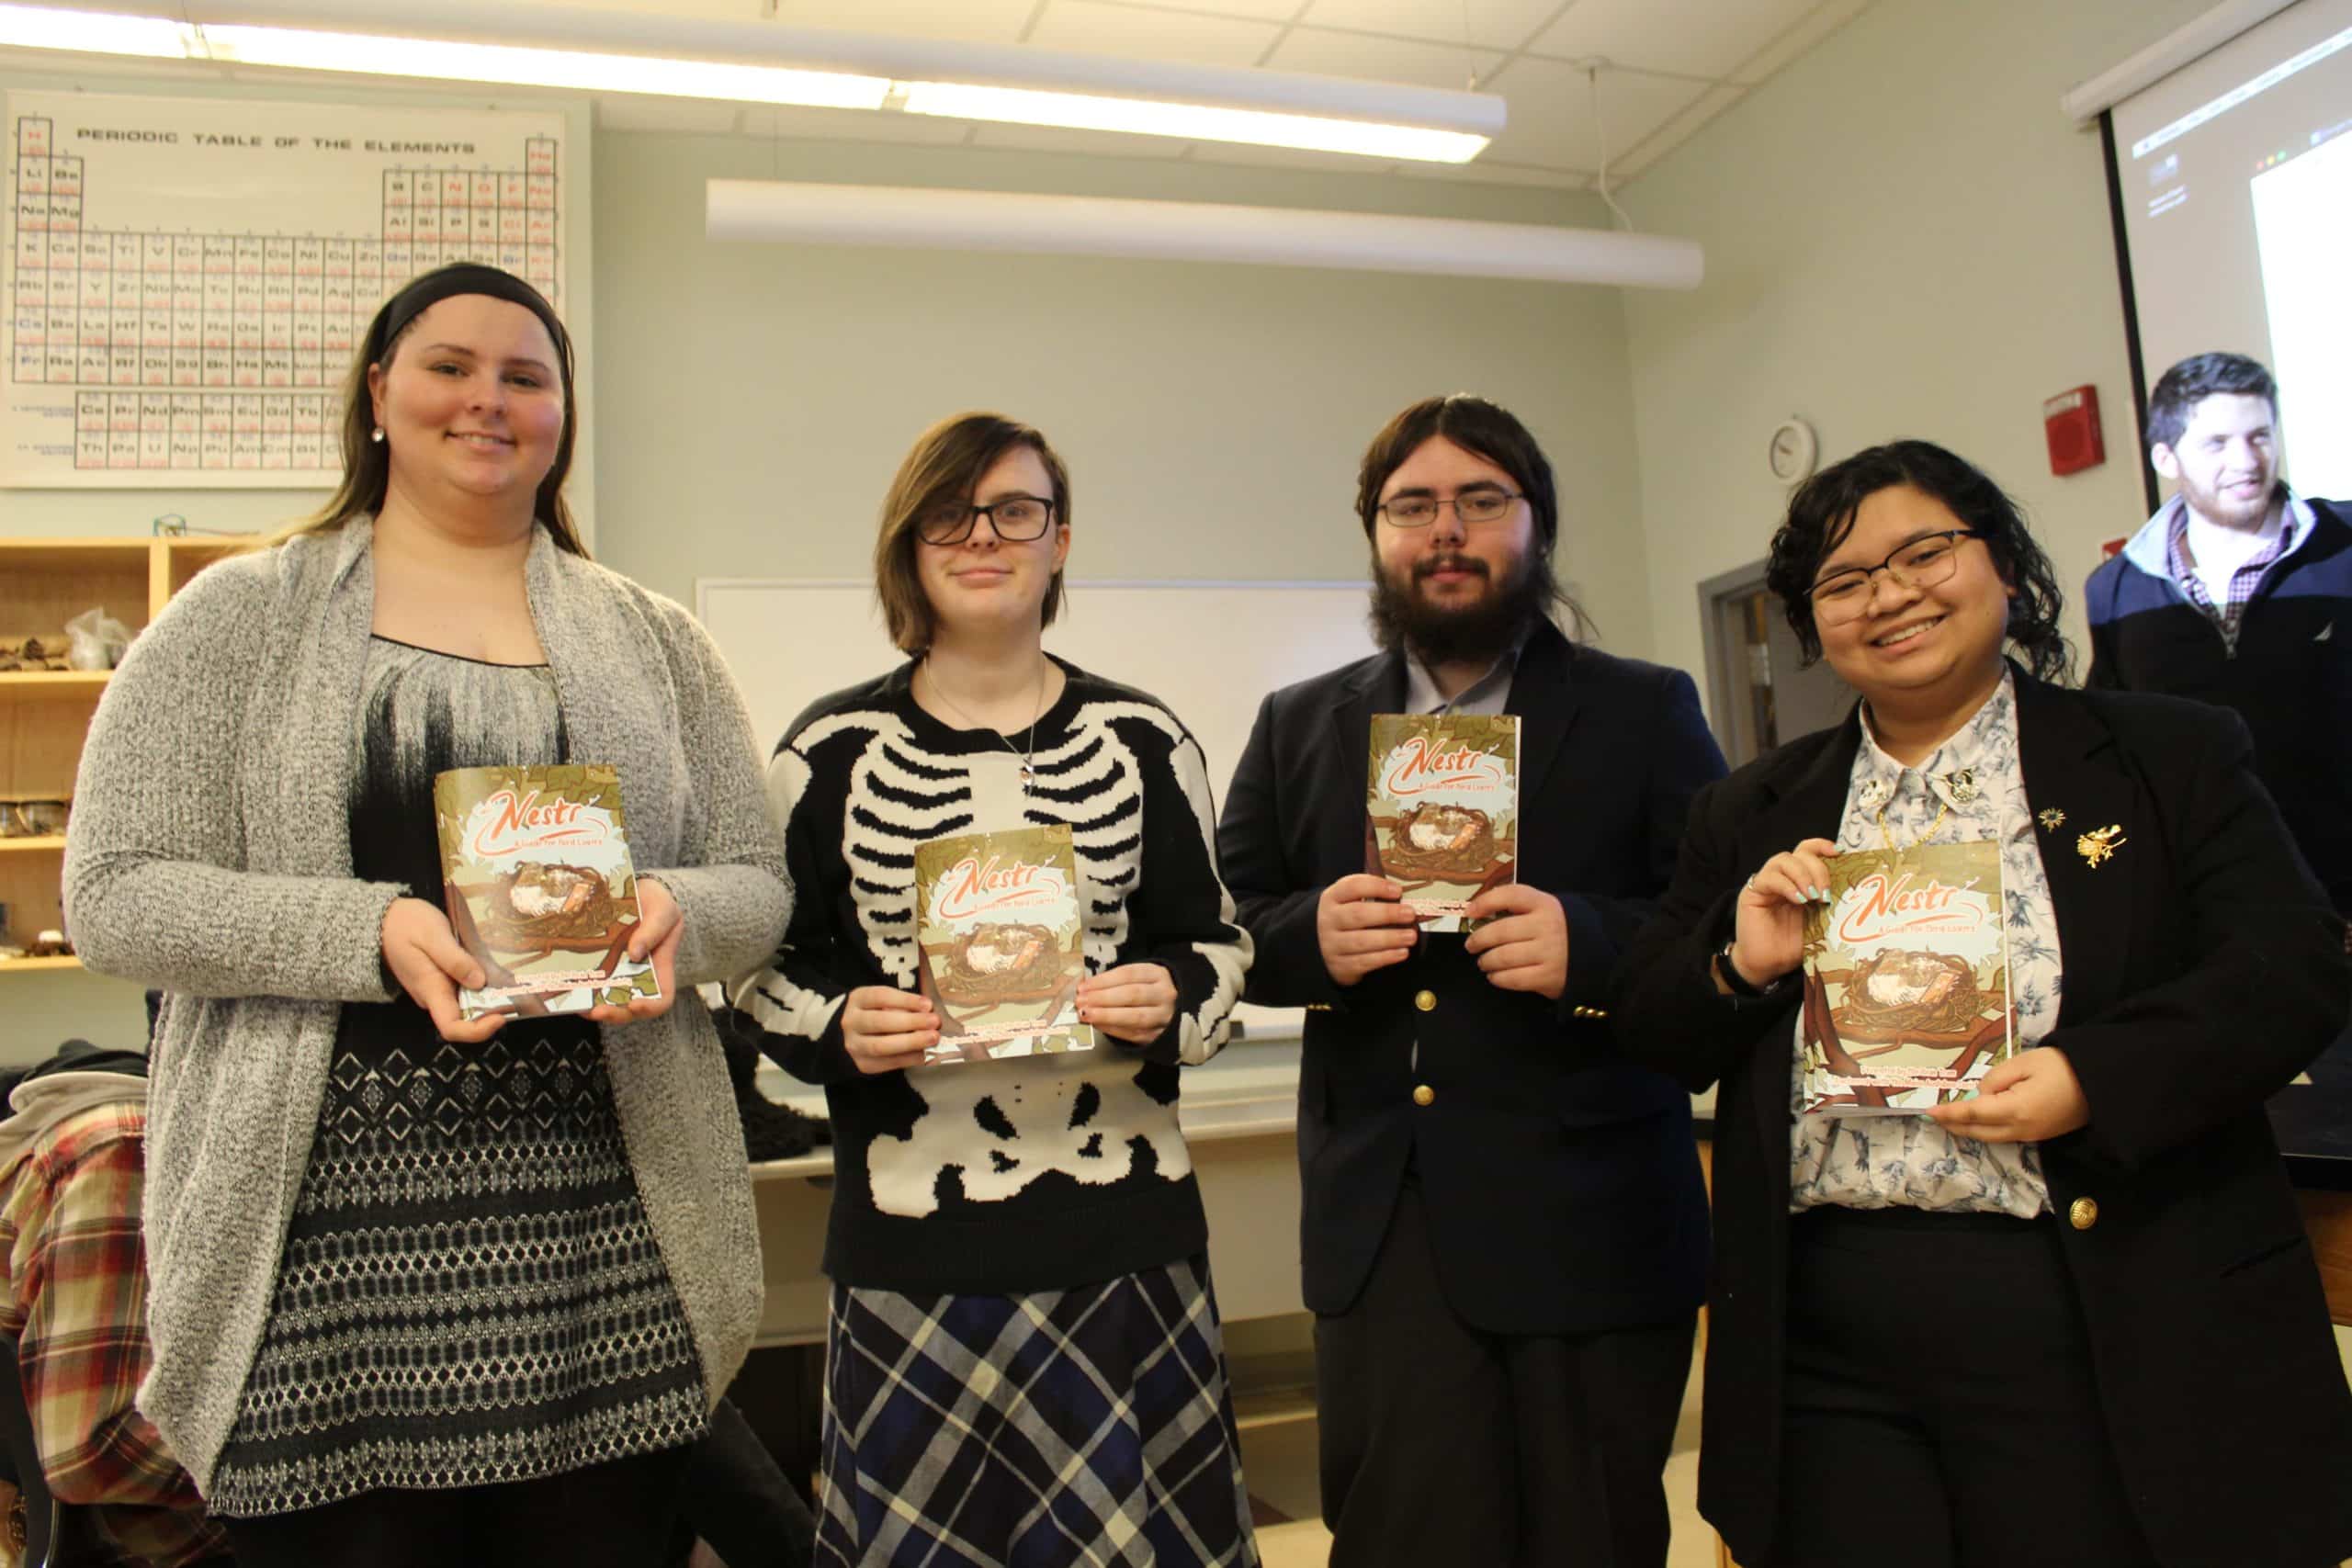 Members of the Bean Team pose with their Nestr brochure. (l-r) Calea Roy, Regan King, Corey Boynton, April Azutillo